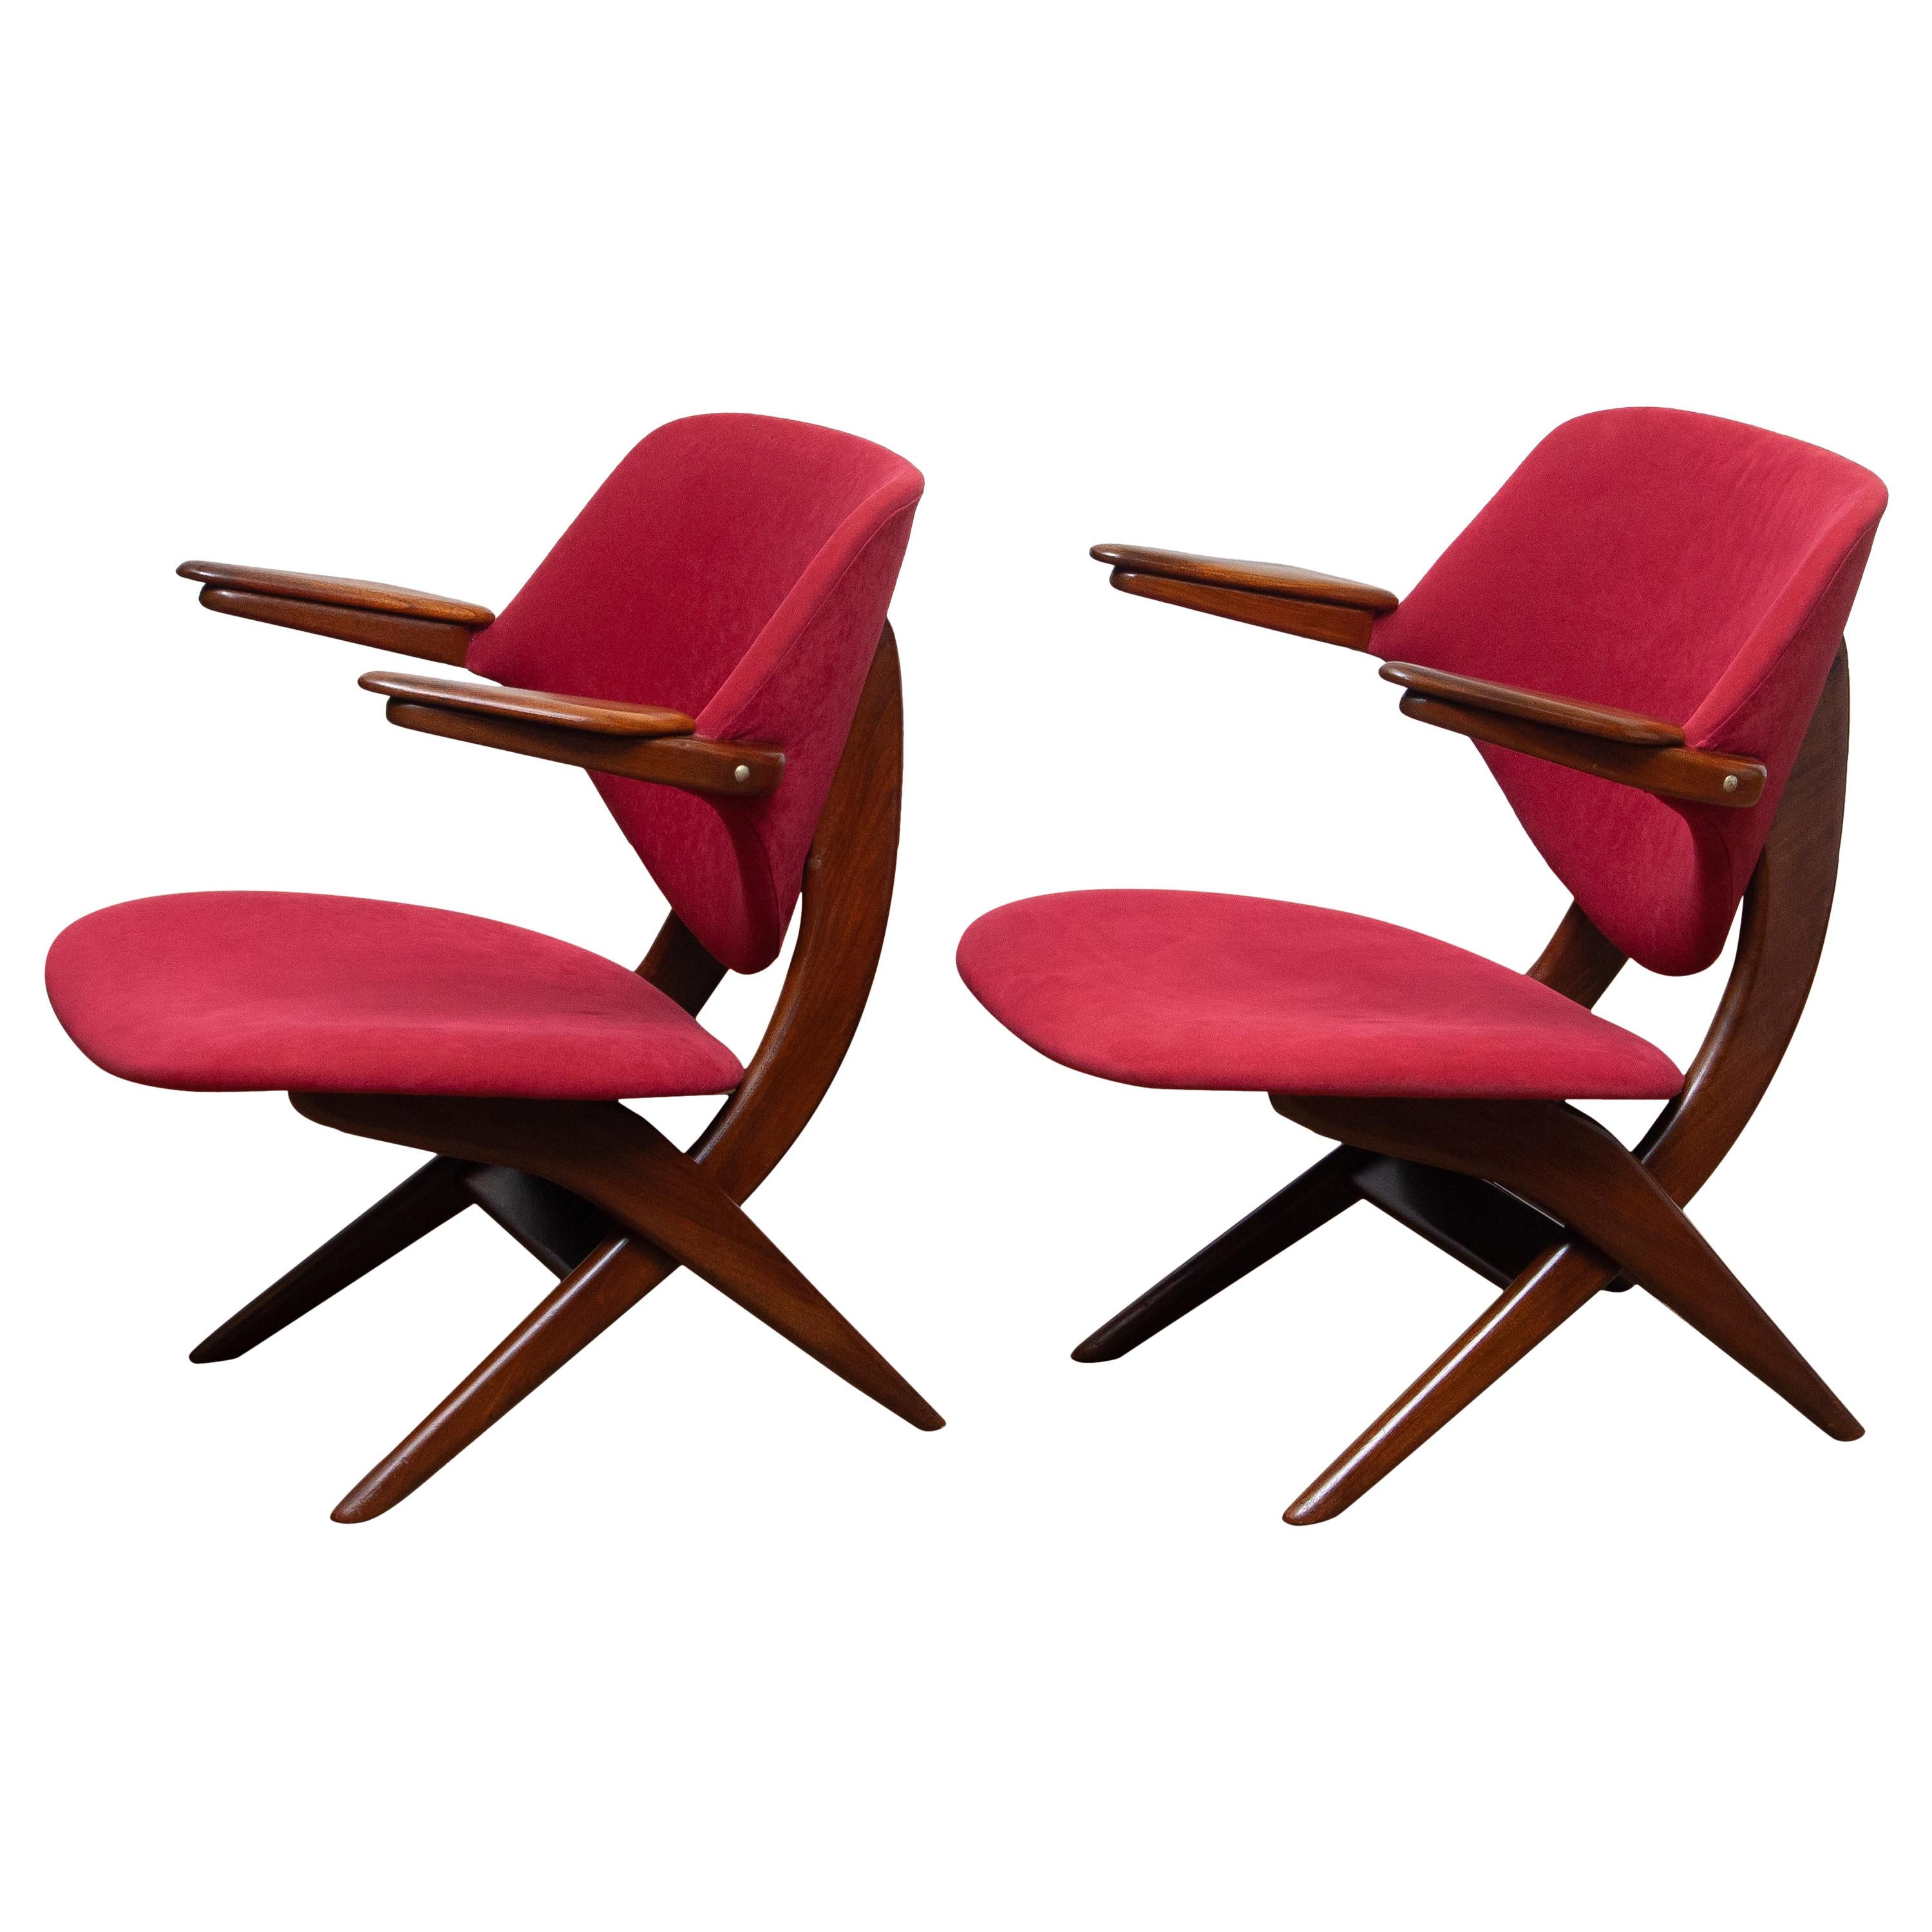 1950s, Set of Two Teak Lounge/Easy Chairs by Louis Van Teeffelen for Wébé